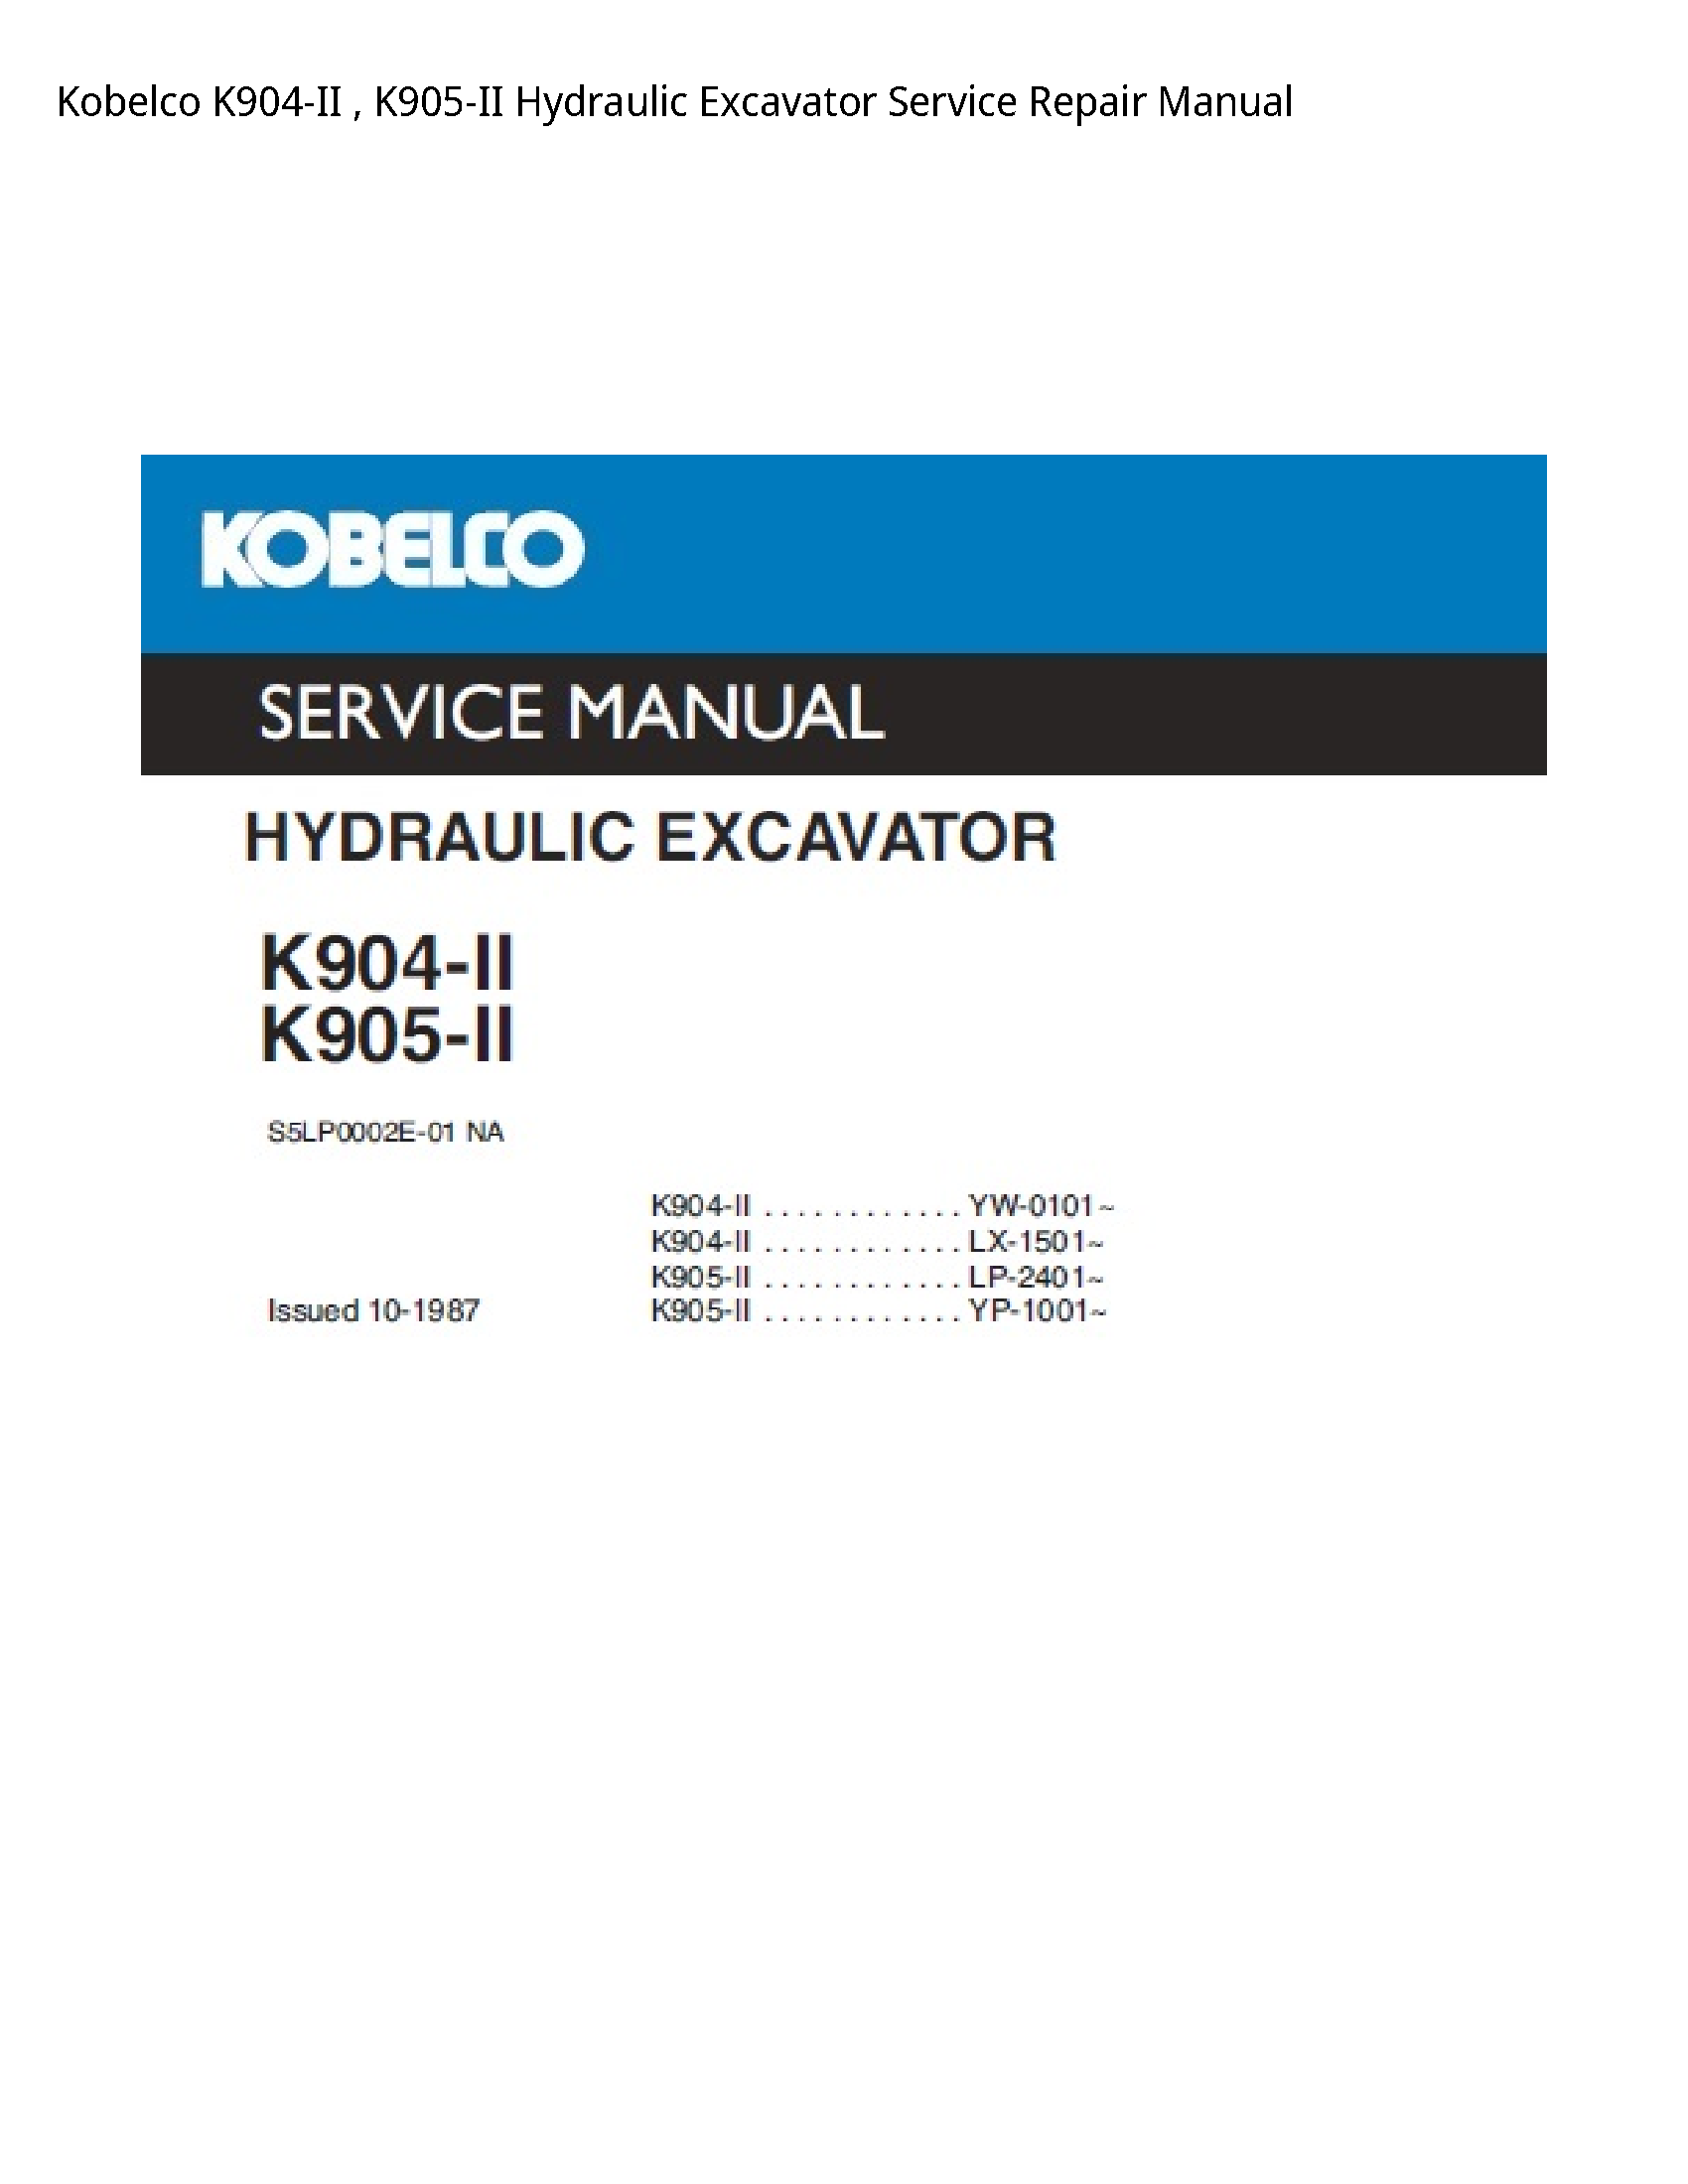 Kobelco K904-II Hydraulic Excavator manual